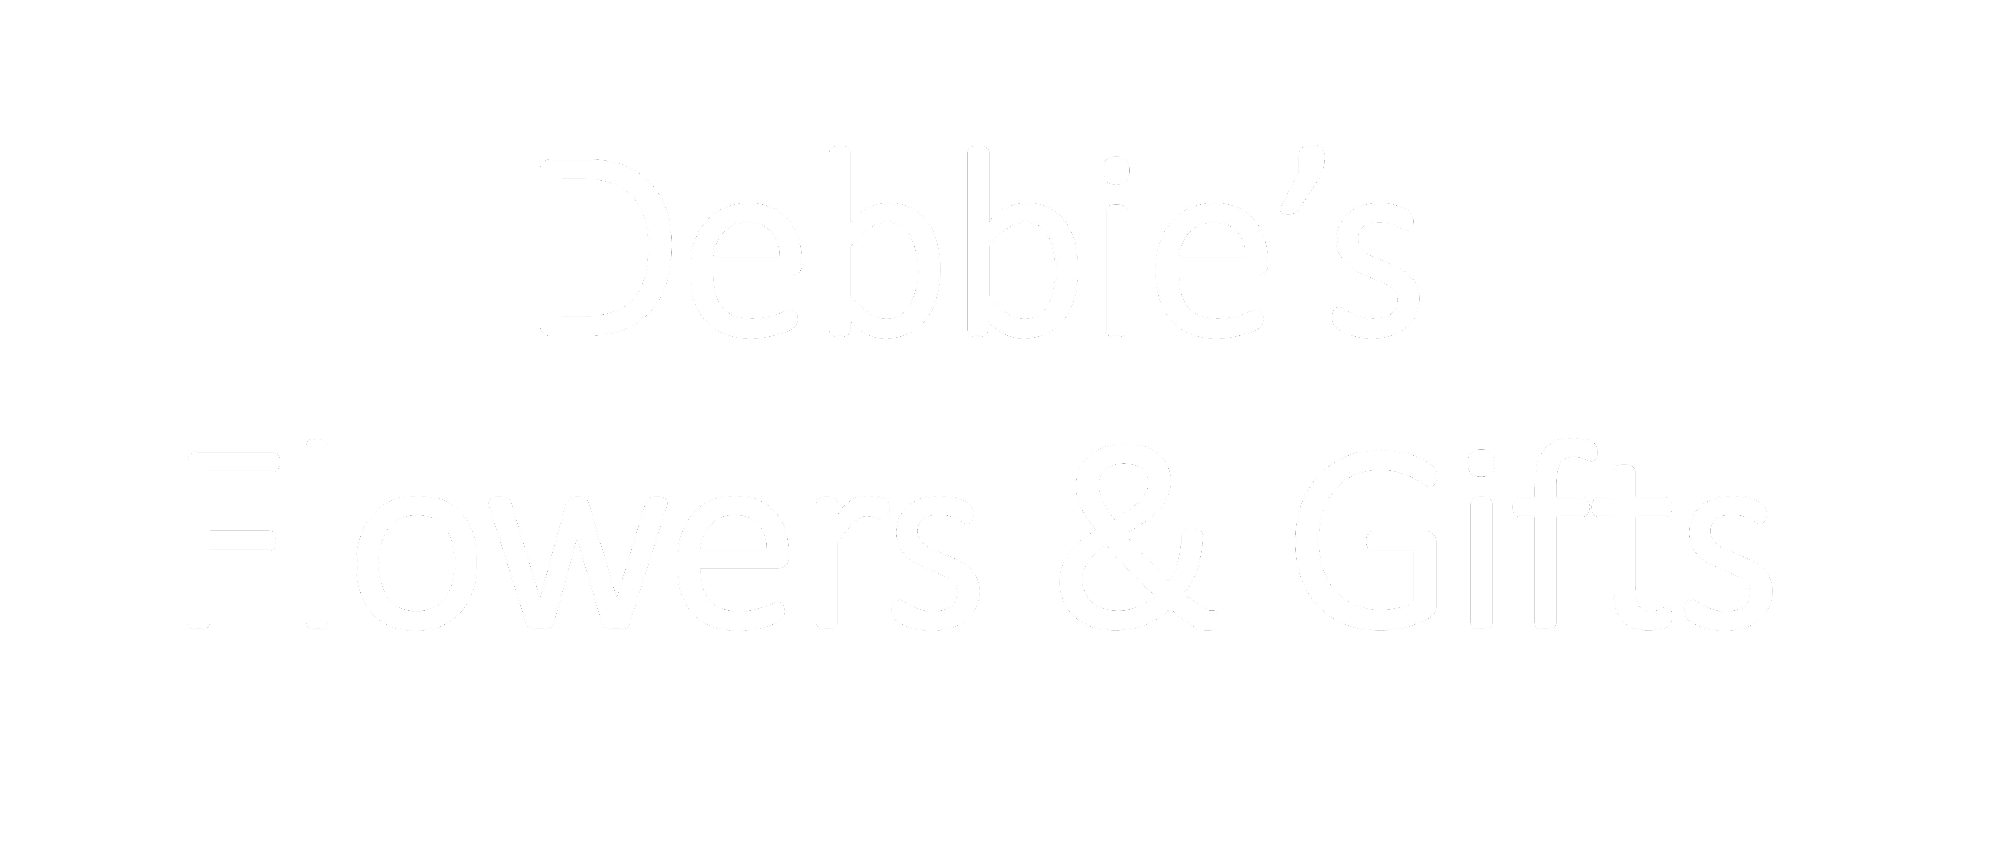 Debbie's Flowers & Gifts